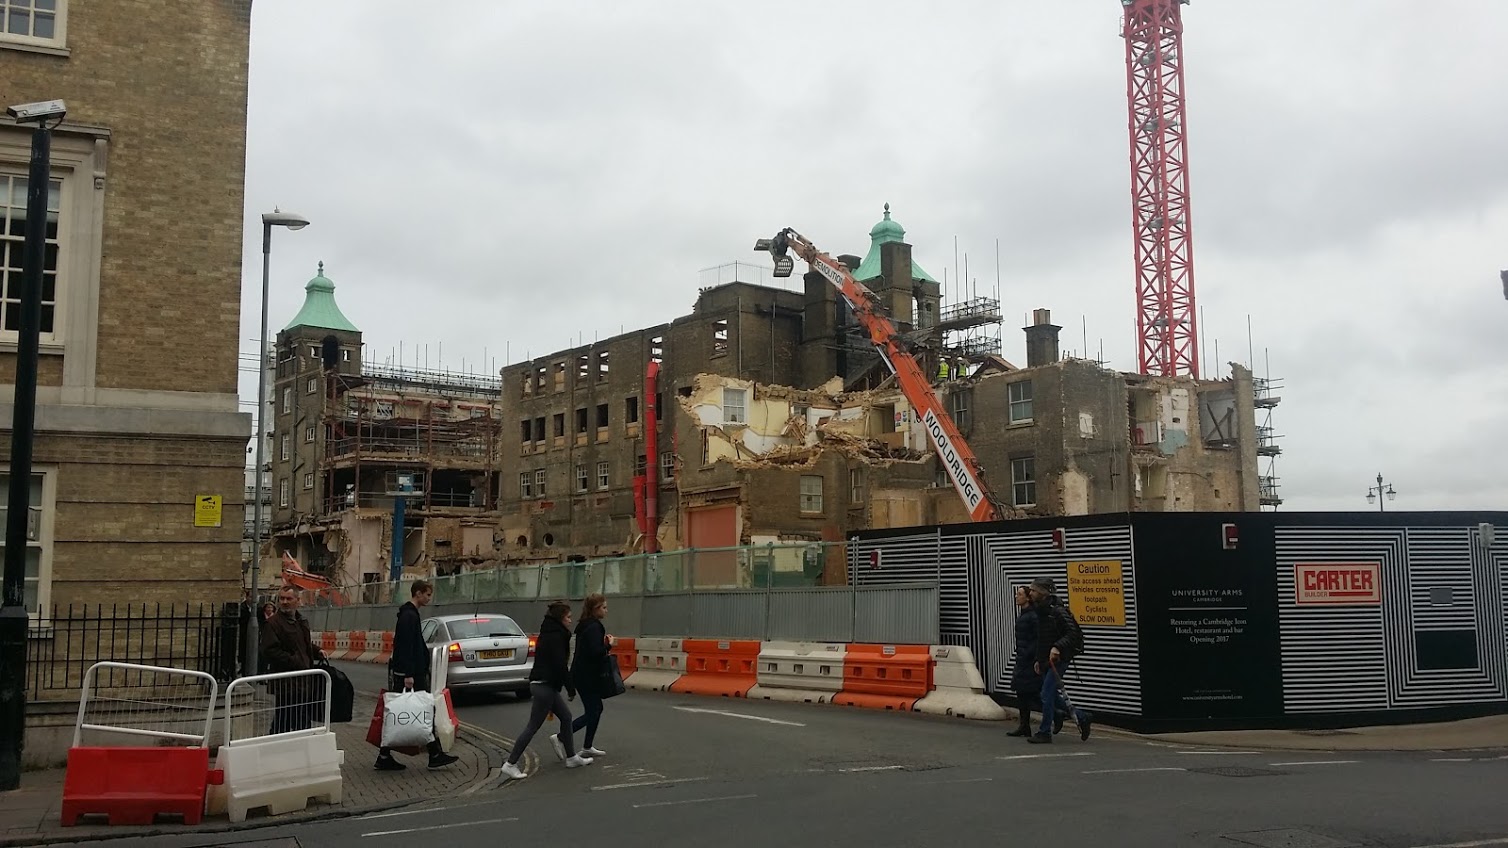 Demolition of the University Arms Hotel, Cambridge